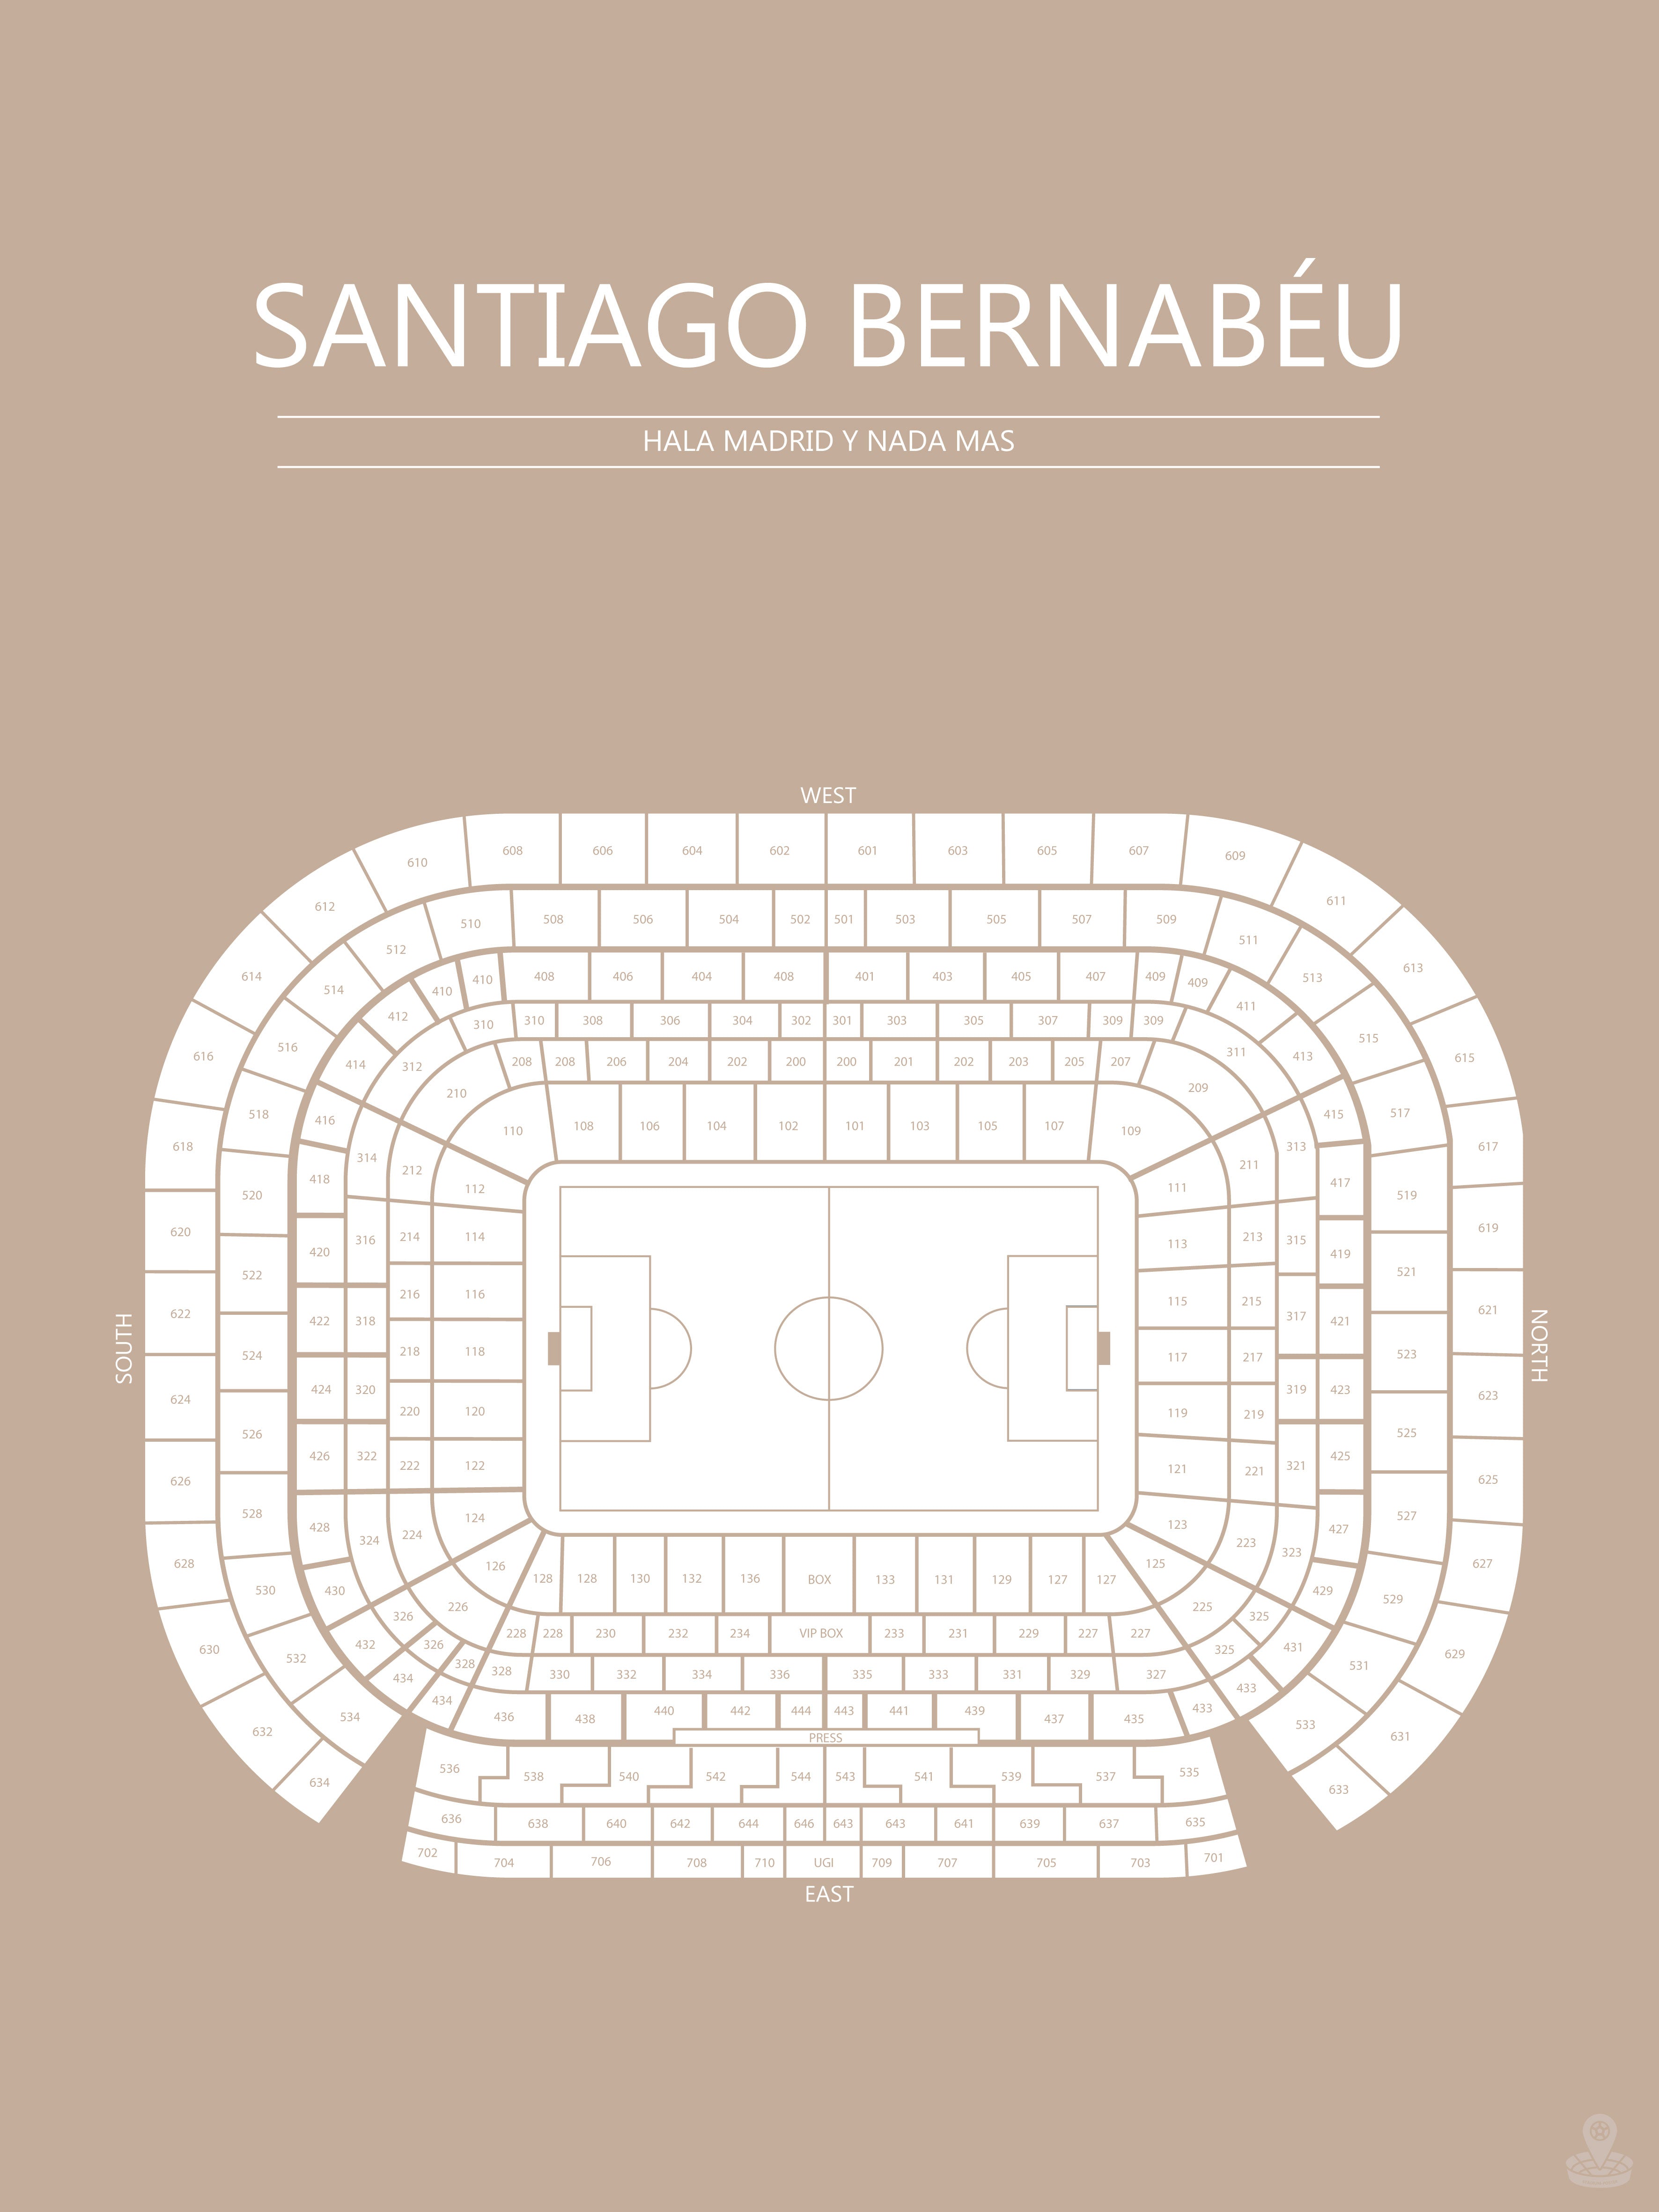 Fodbold plakat Real Madrid Santiago Bernabeu sand